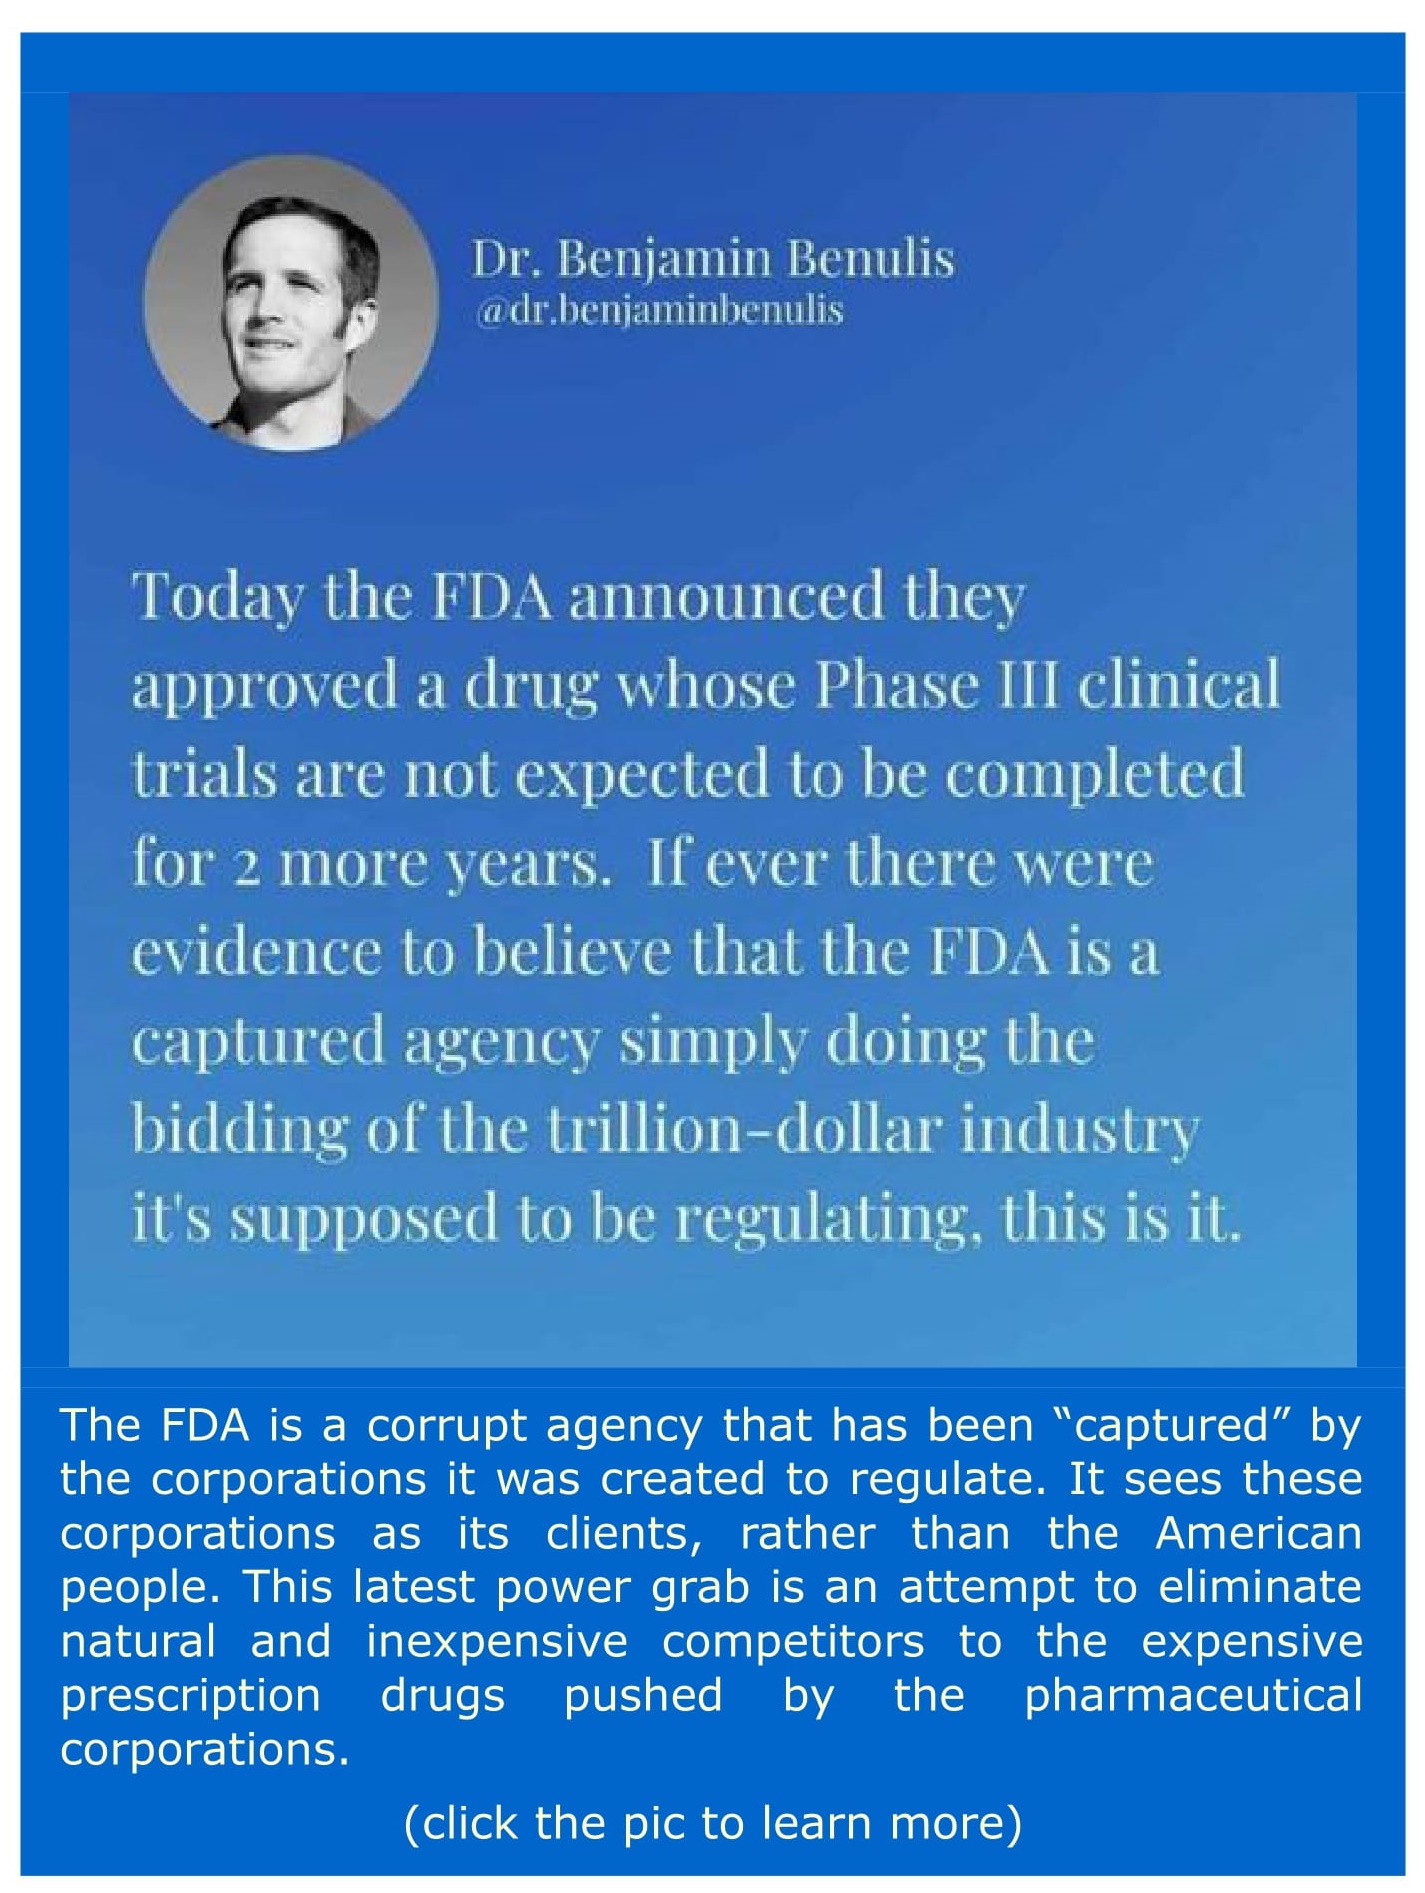 Corruption of FDA